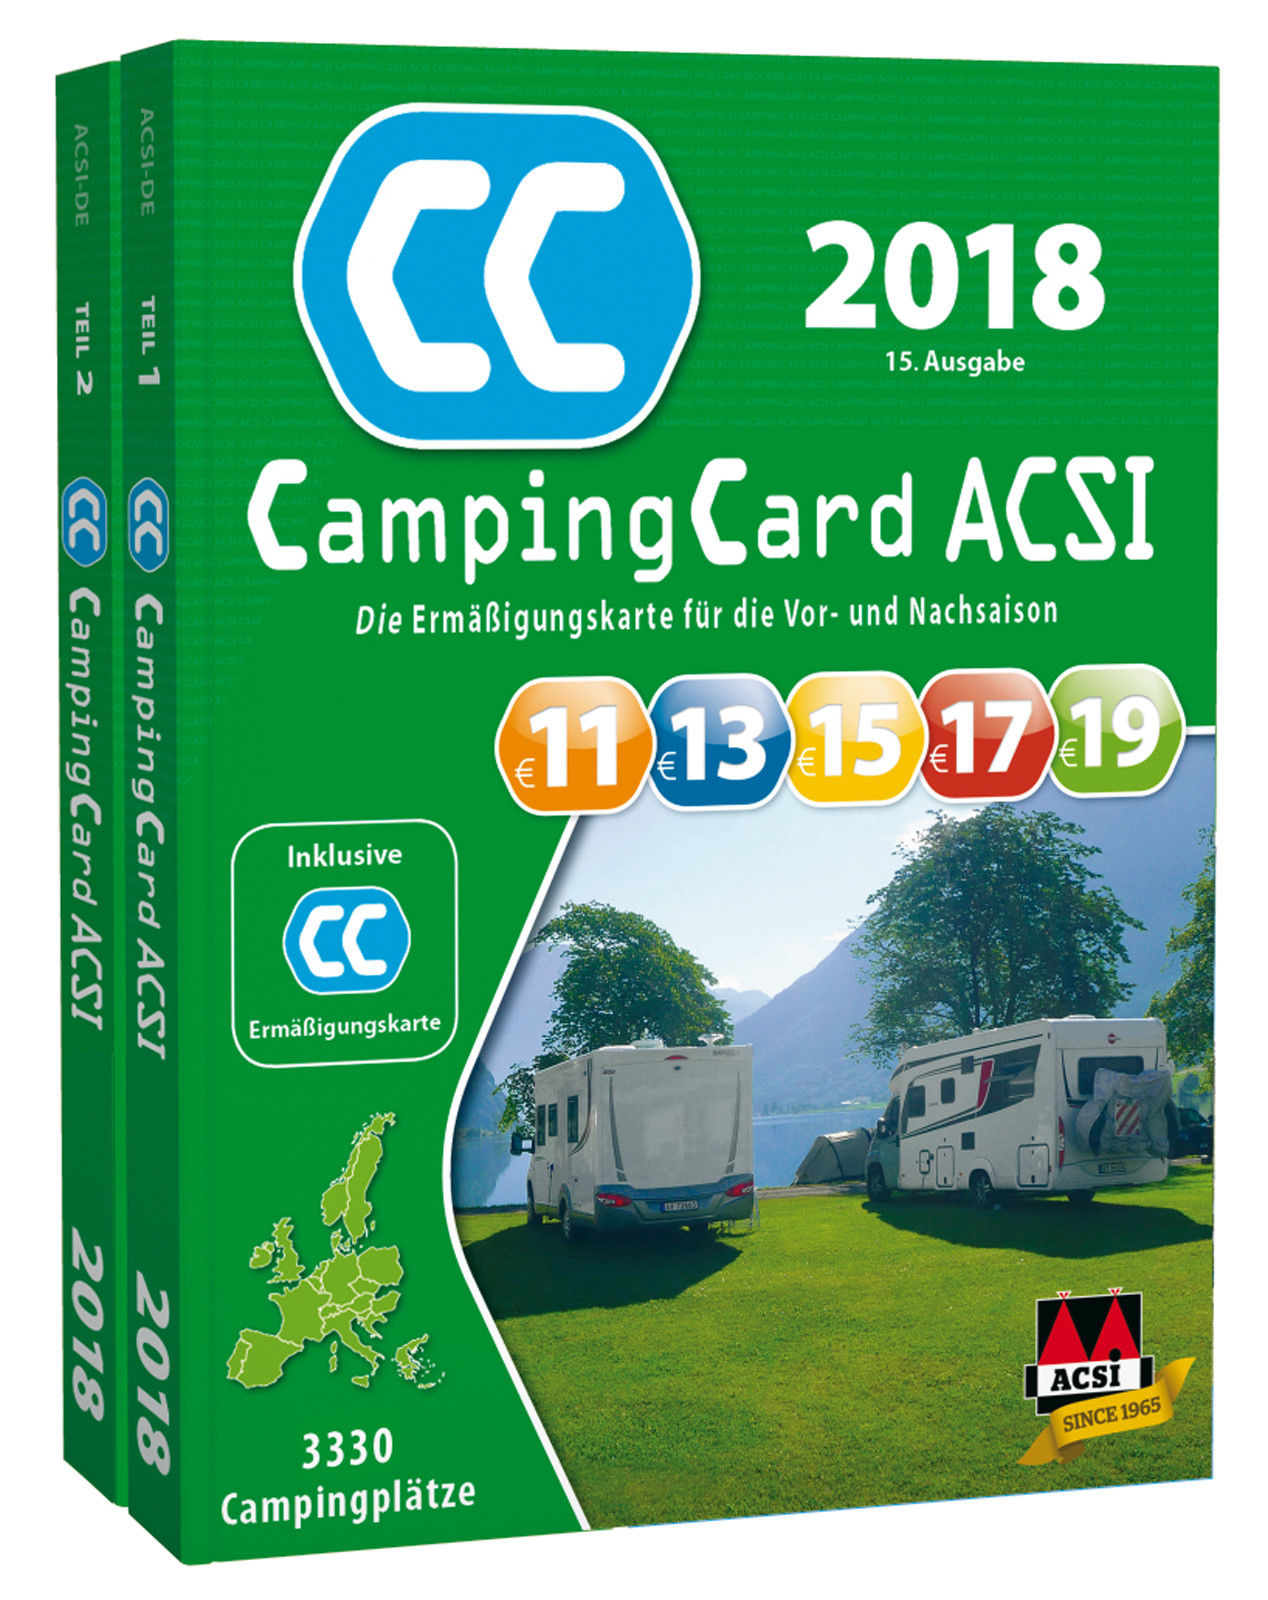 ACSI CampingCard 2018 Campingführer inkl. Ermäßigungskarte für die Nebensaison